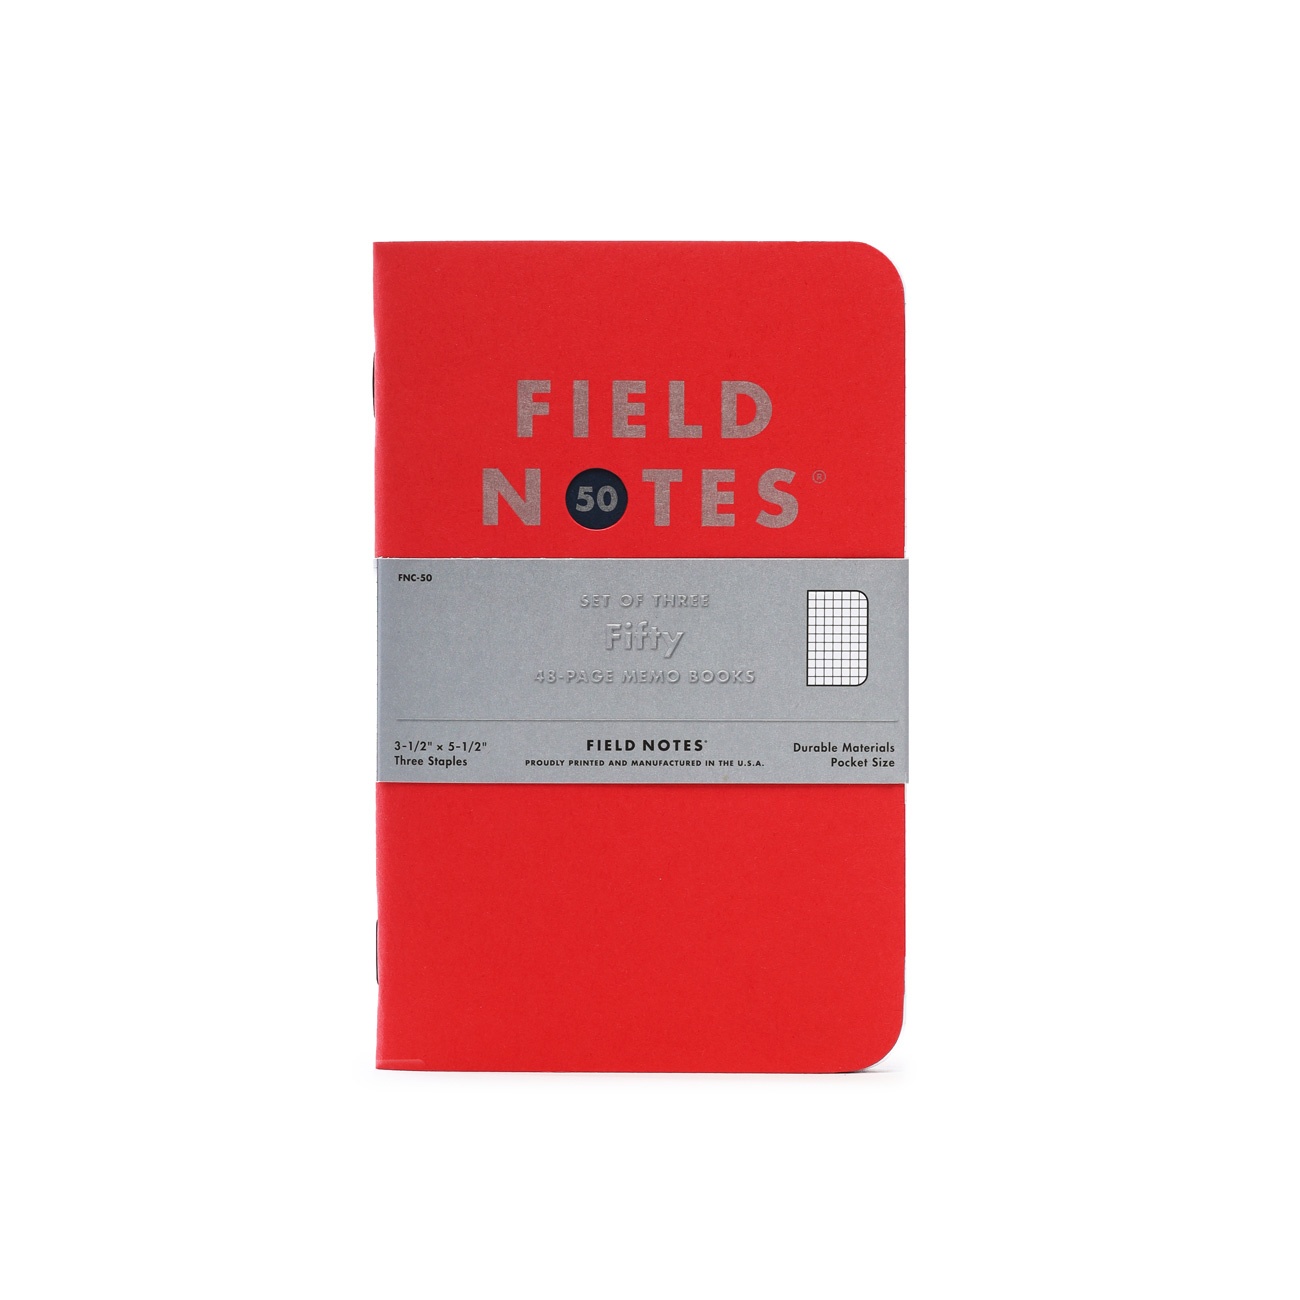 Field Notes, Fifty, 48 Seiten, Memo-Book, rotes Cover,